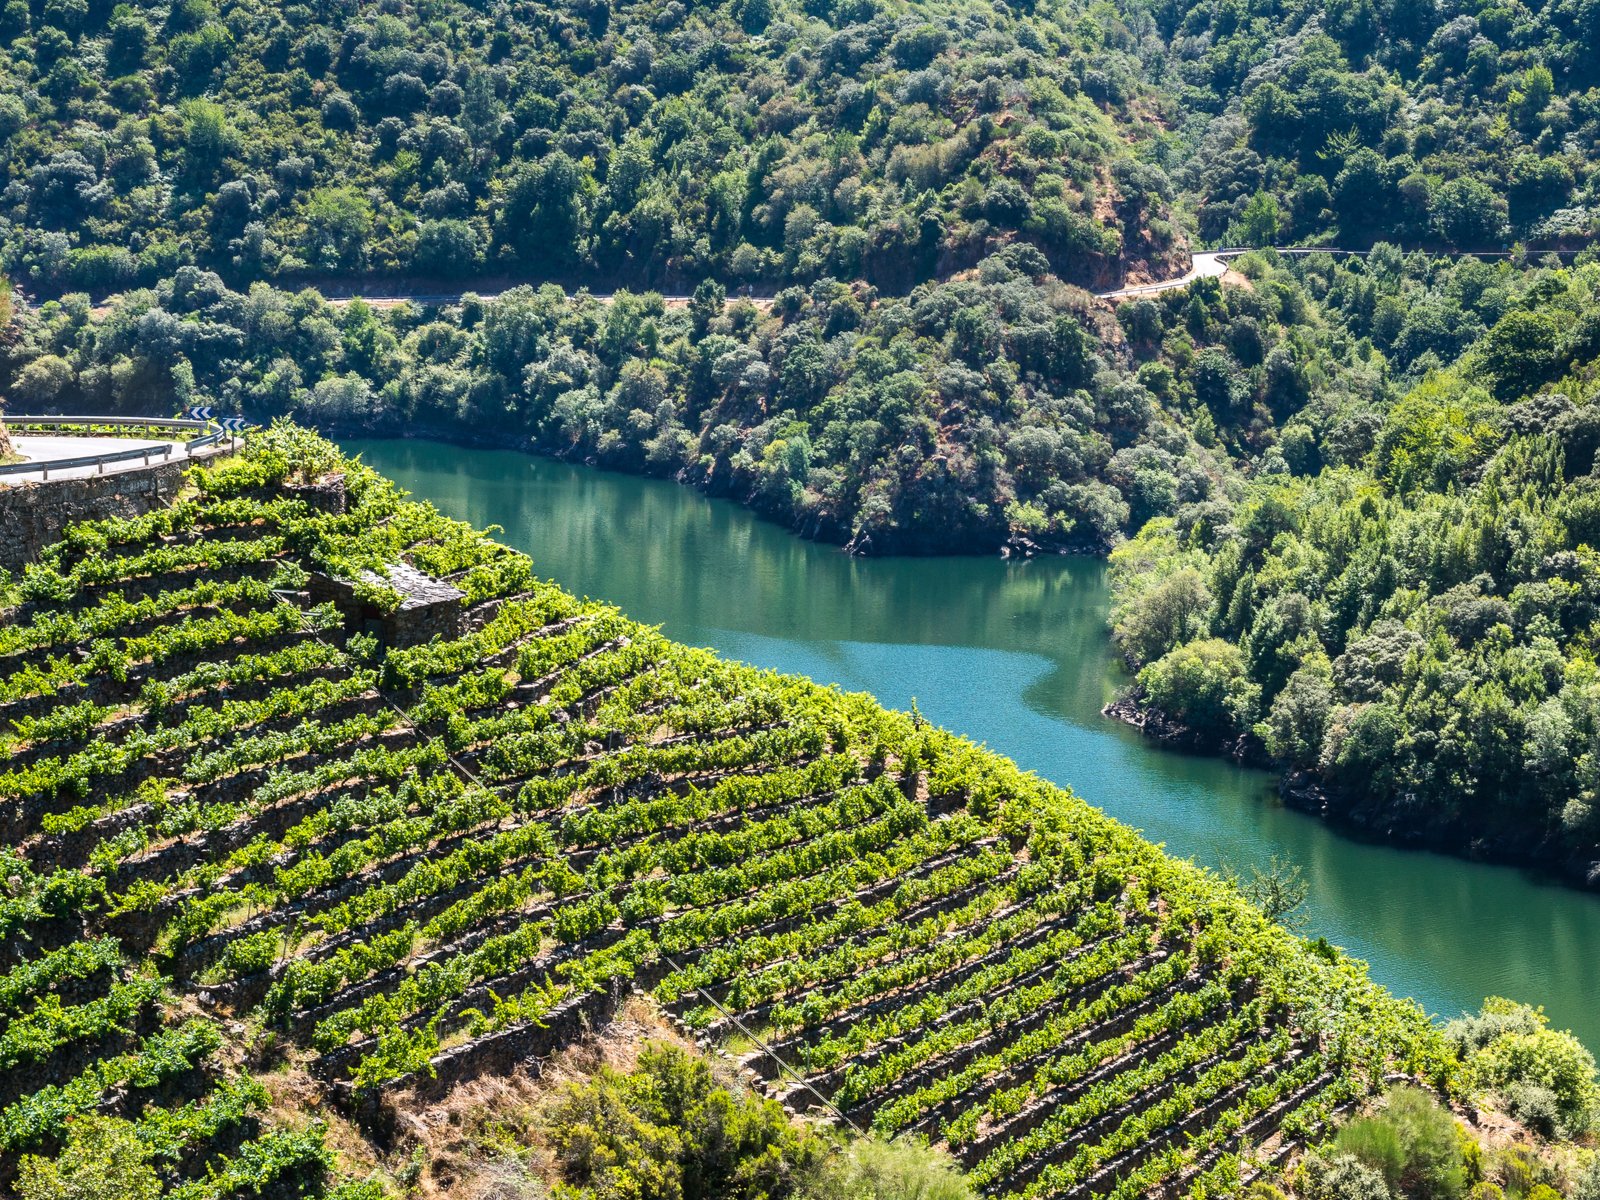 The vineyards in Ribeira Sacra along the&nbsp;Miño river in Spain.